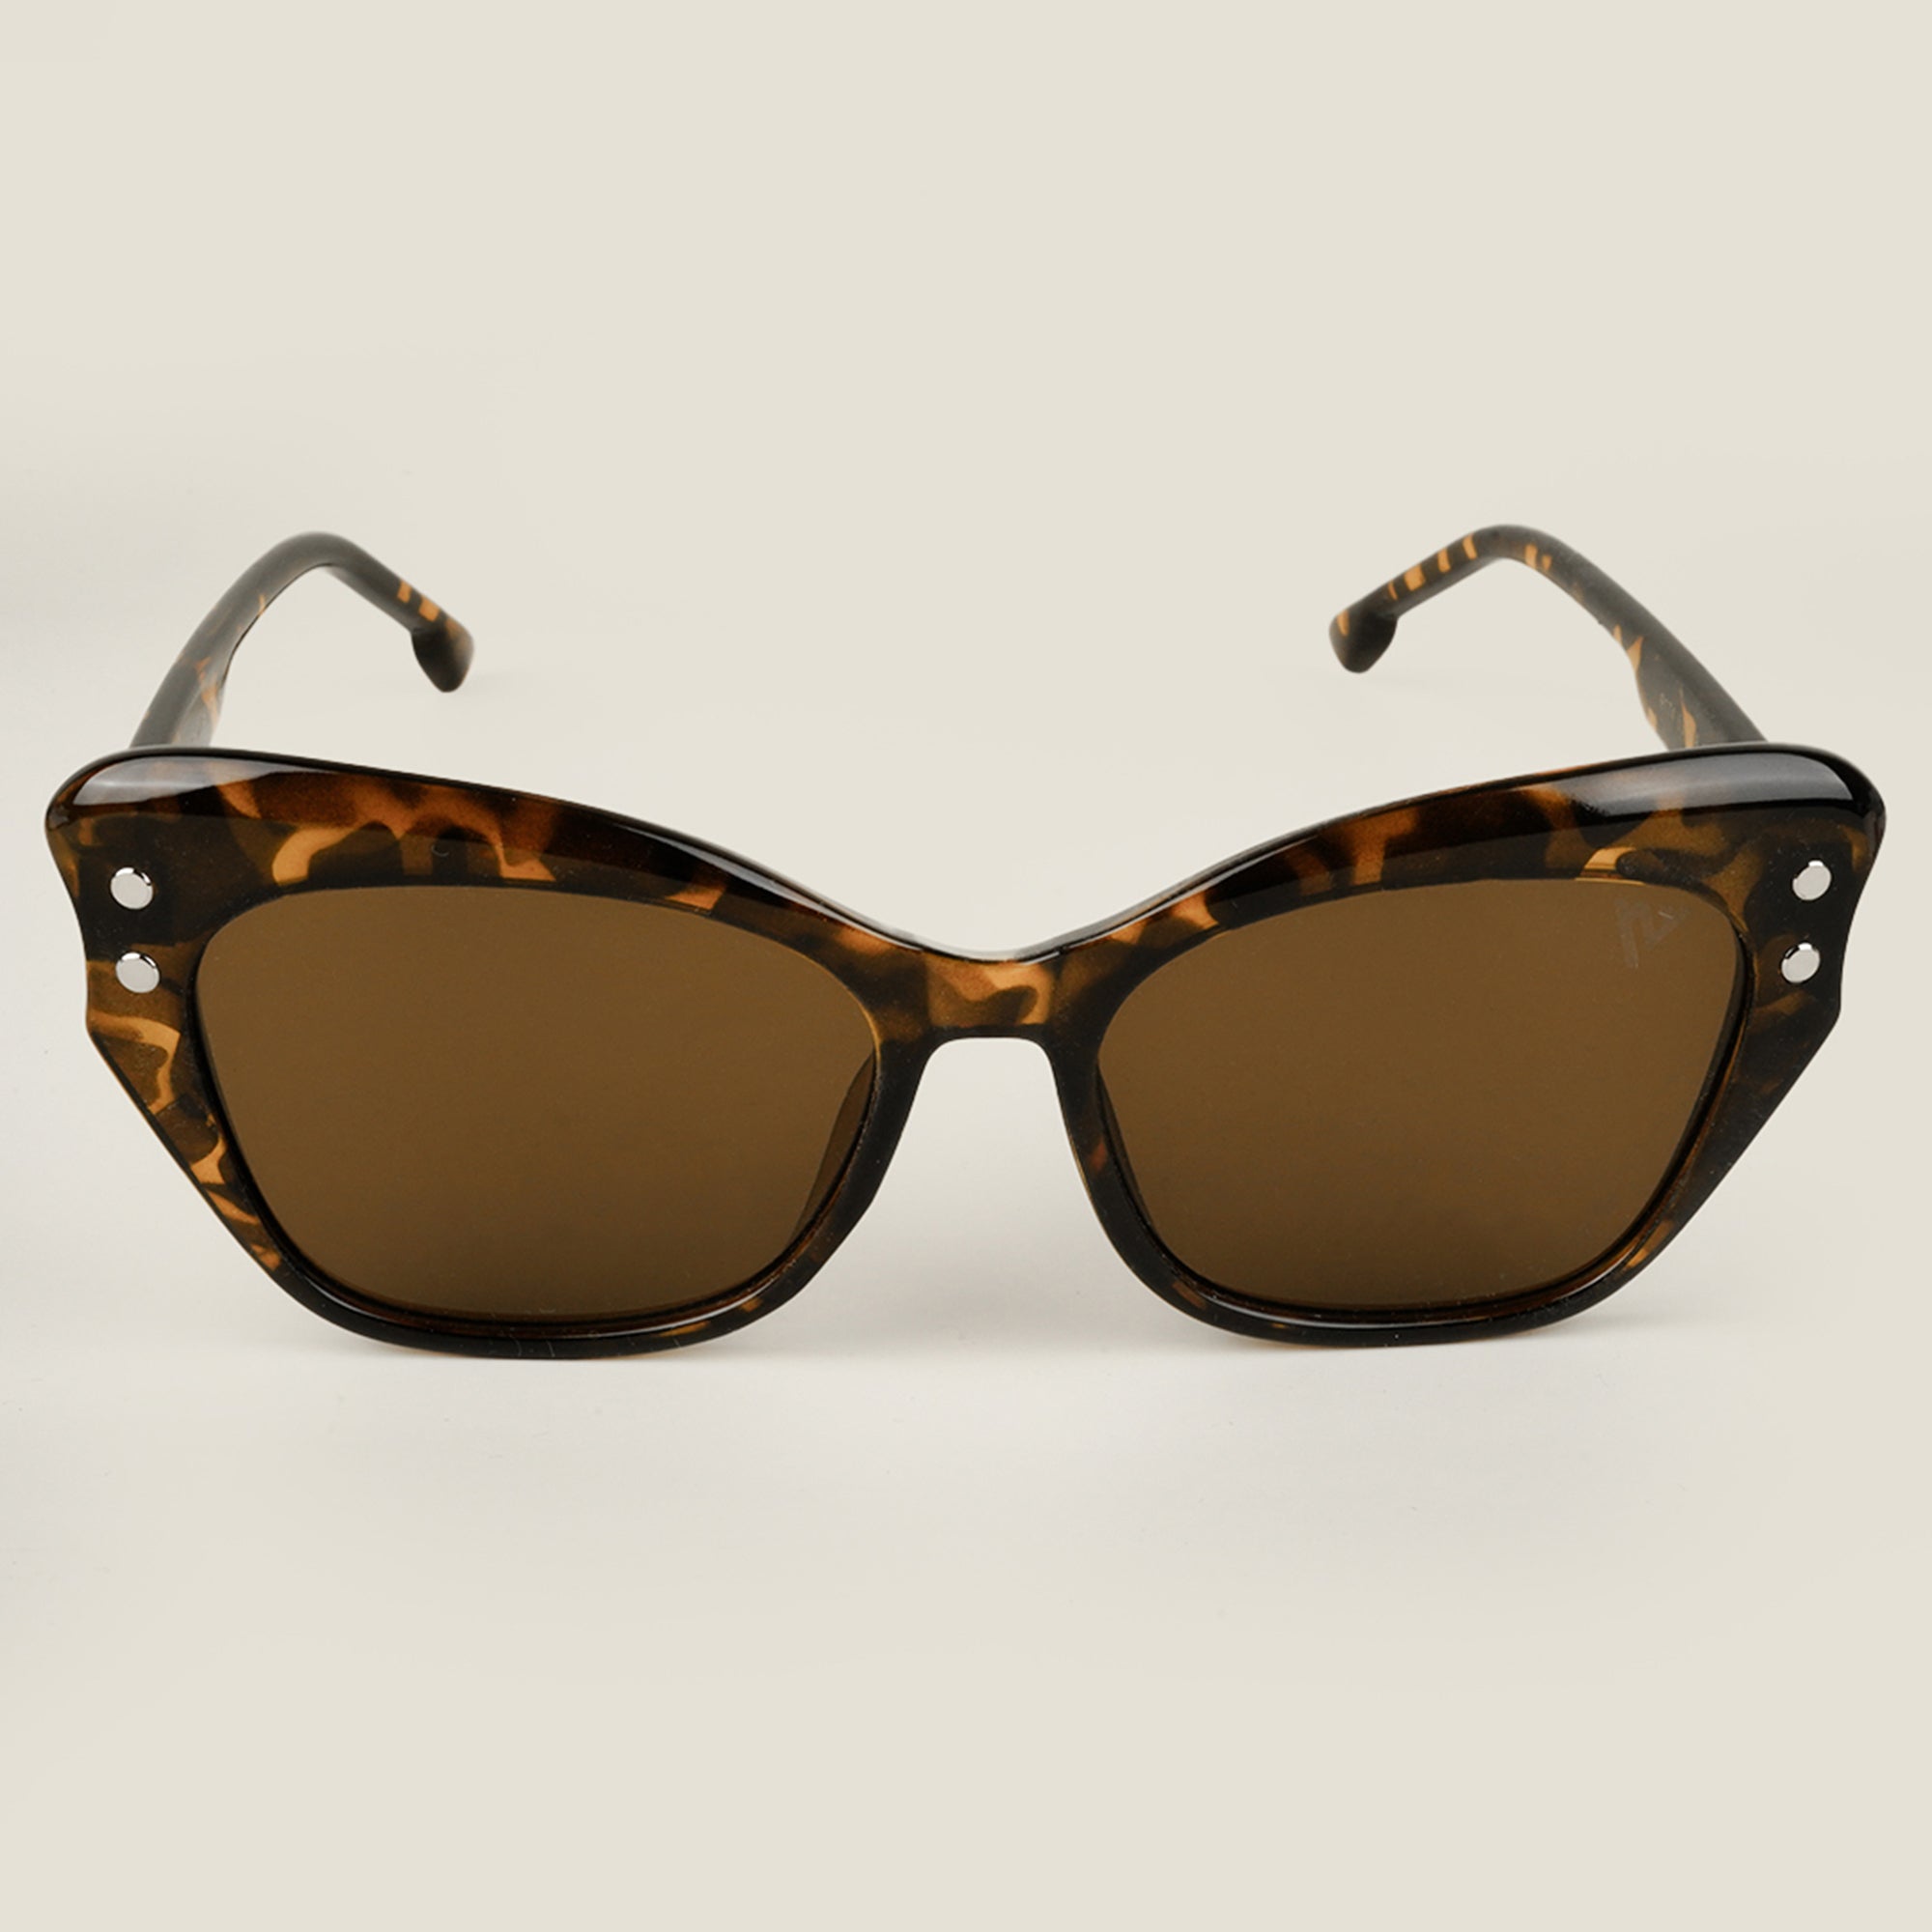 Voyage Demin Brown Cateye Sunglasses for Women (9174MG4108)